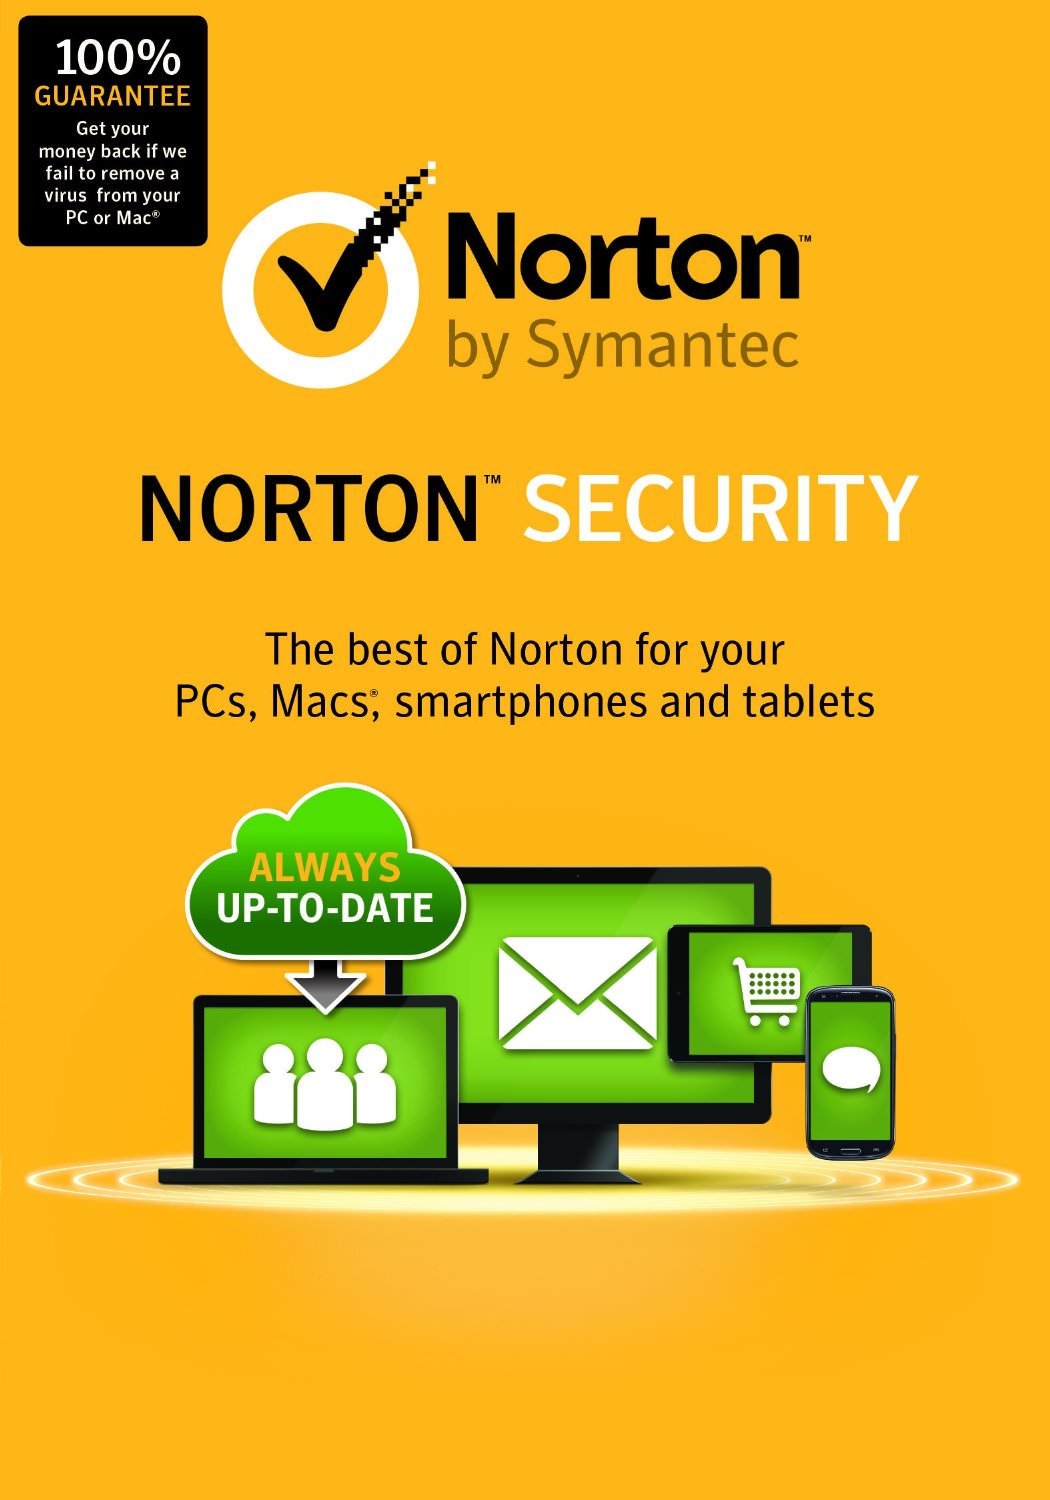 is norton a good antivirus for mac